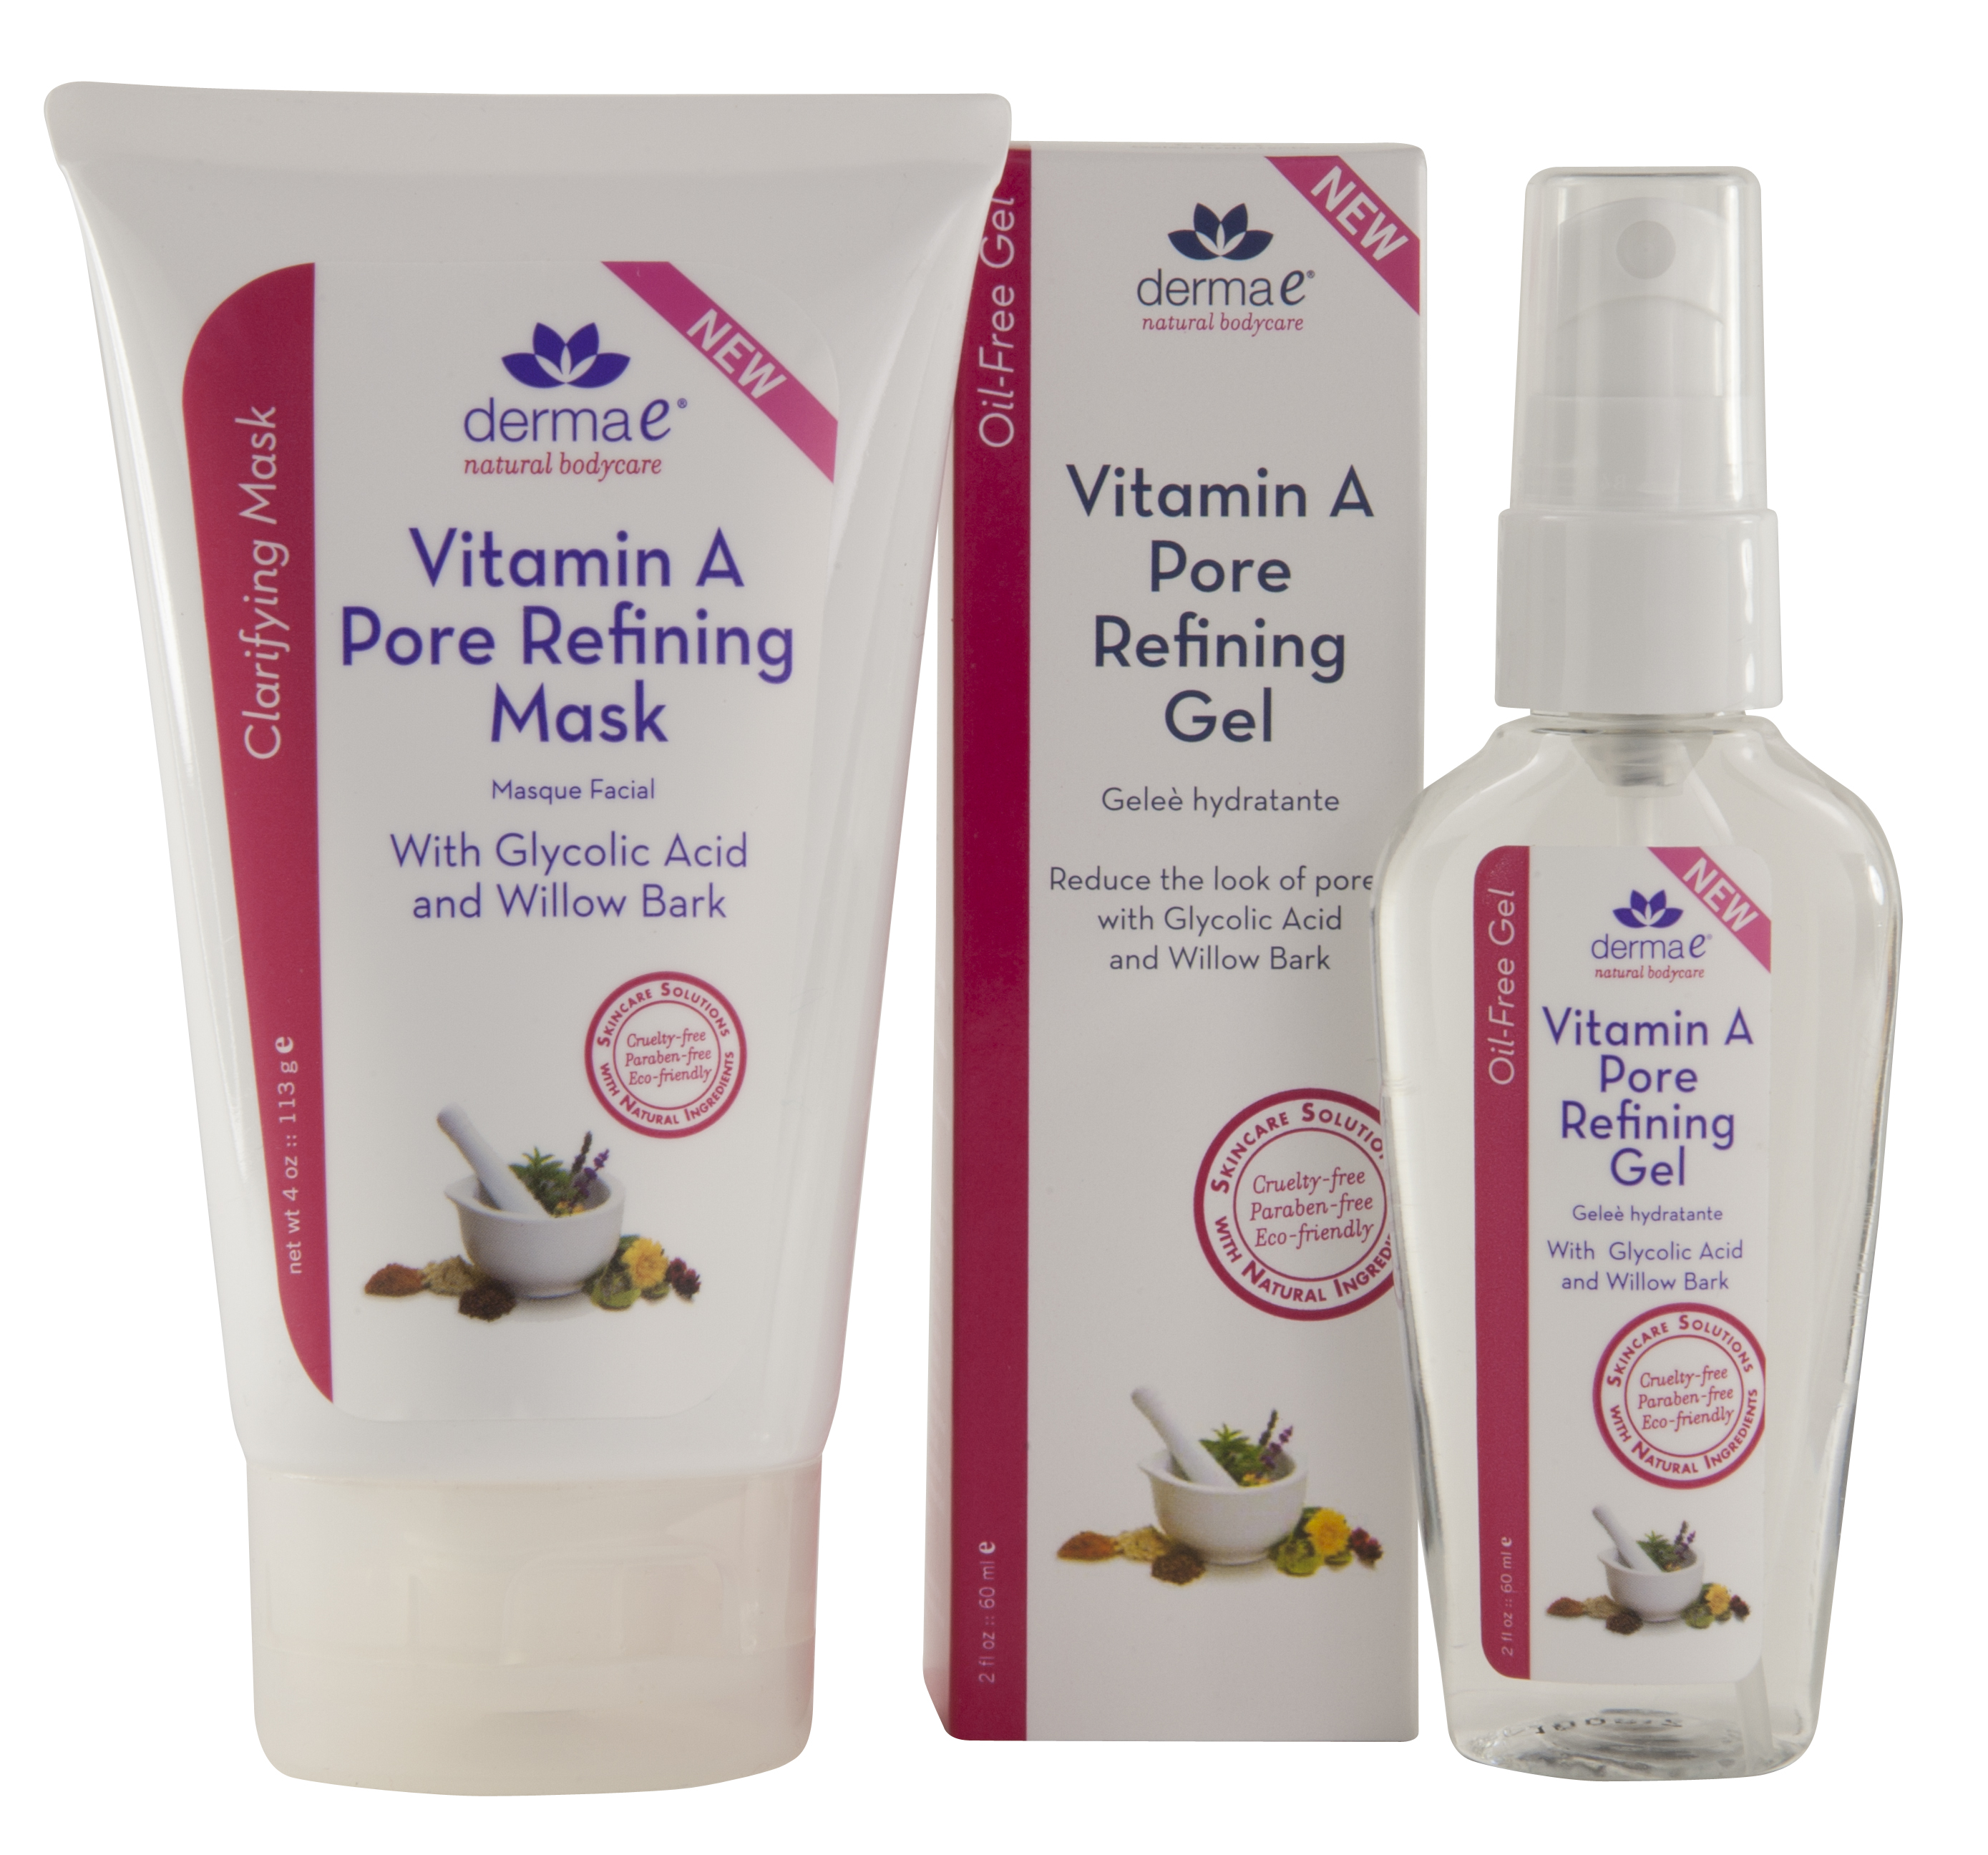 derma e Introduces New Vitamin A Pore Refining Products, MASSAGE Magazine